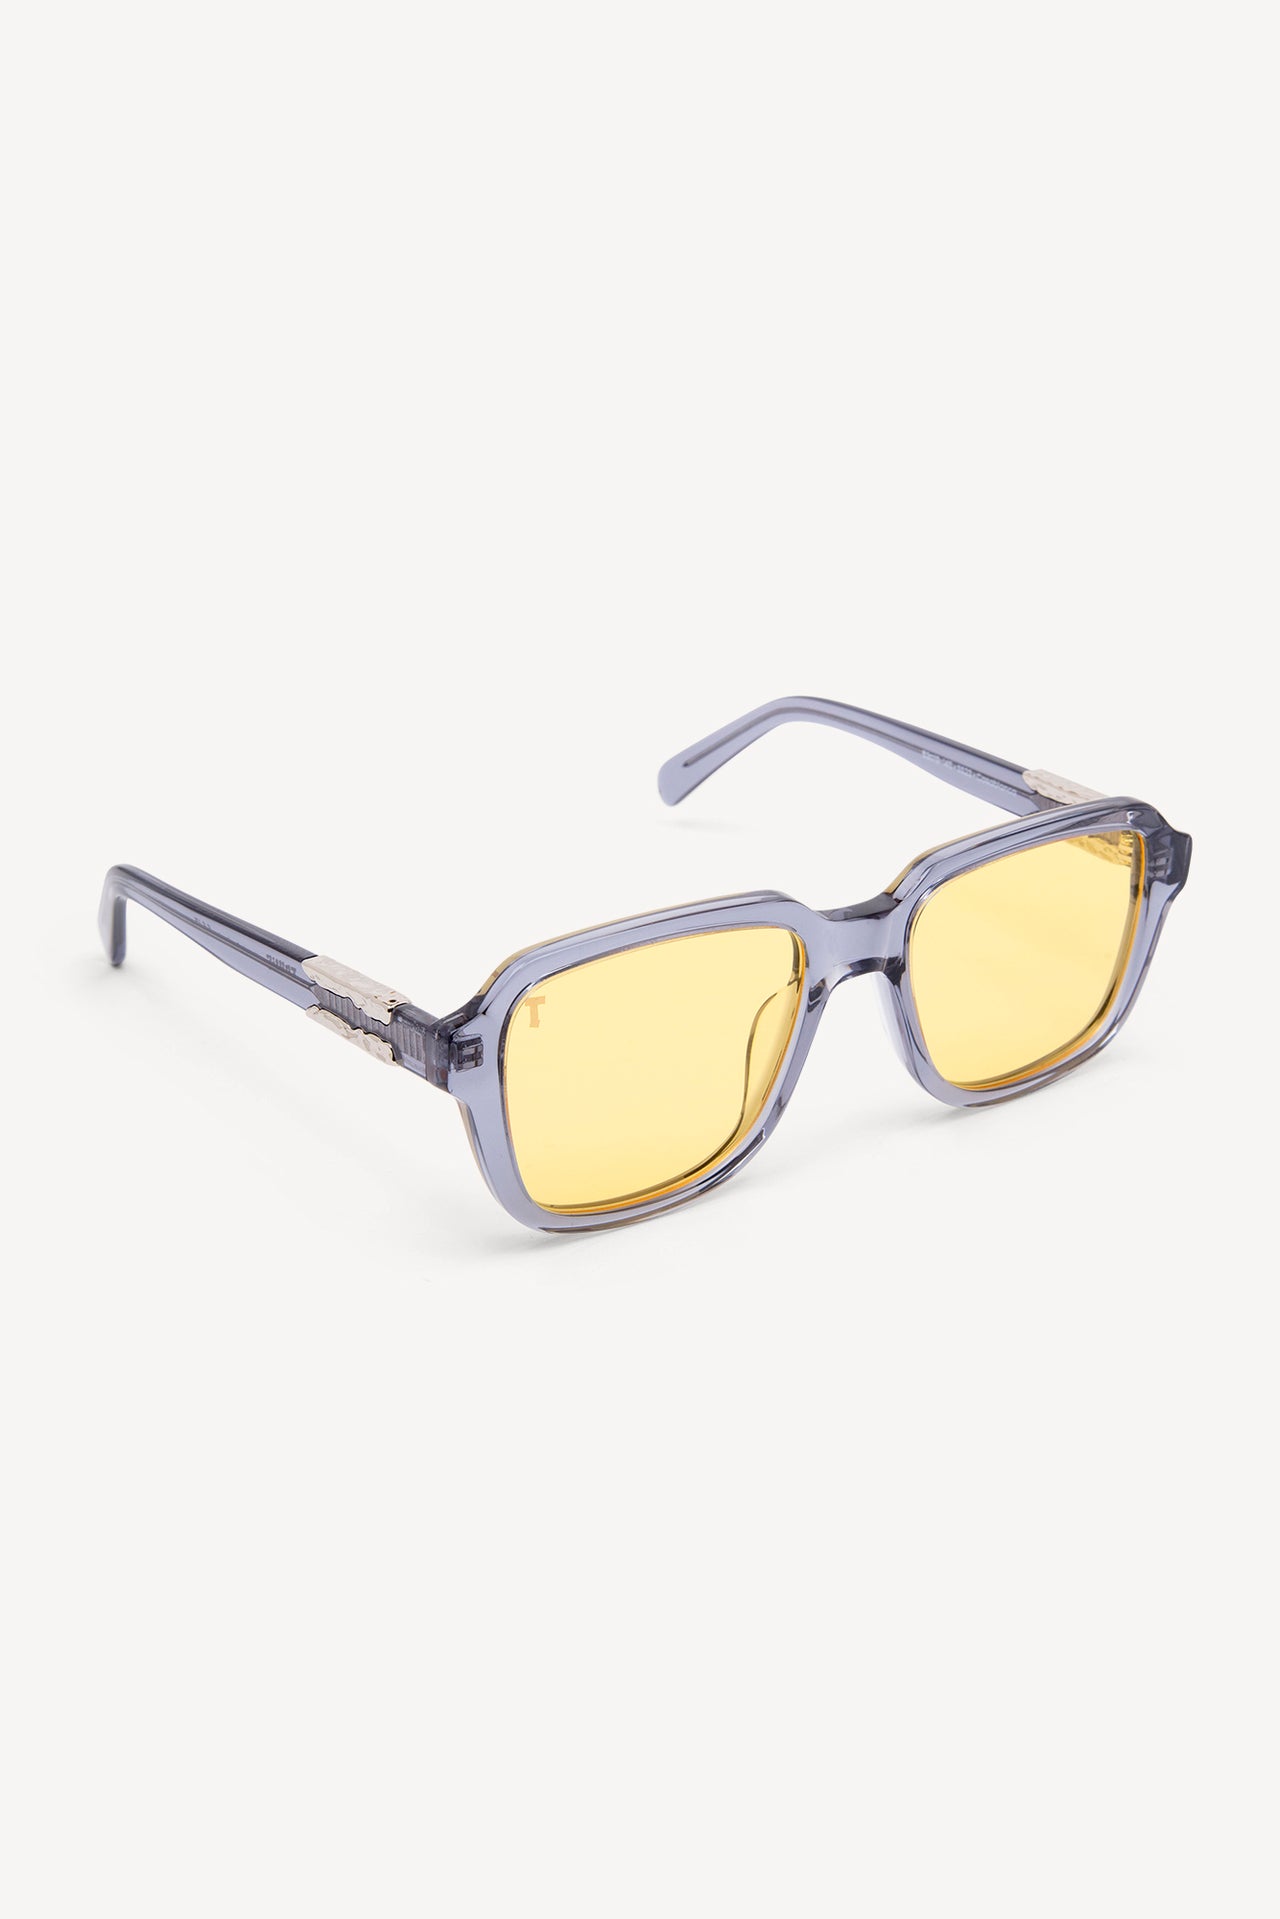 TOATIE Casablanca Square Sunglasses GREY/YELLOW